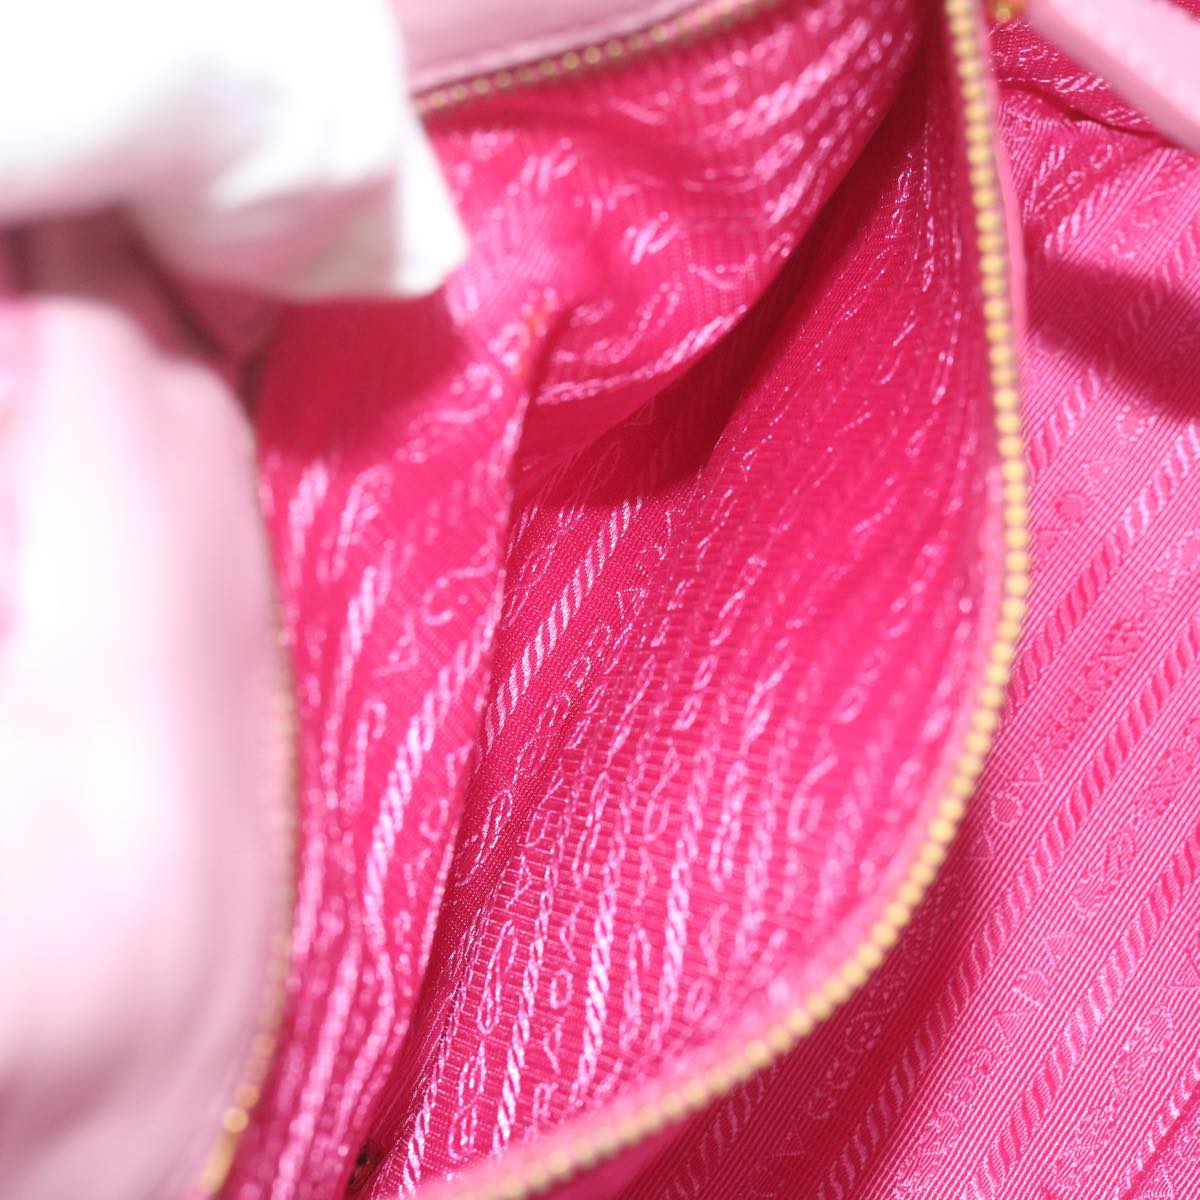 PRADA Hand Bag Nylon Pink Auth am5486